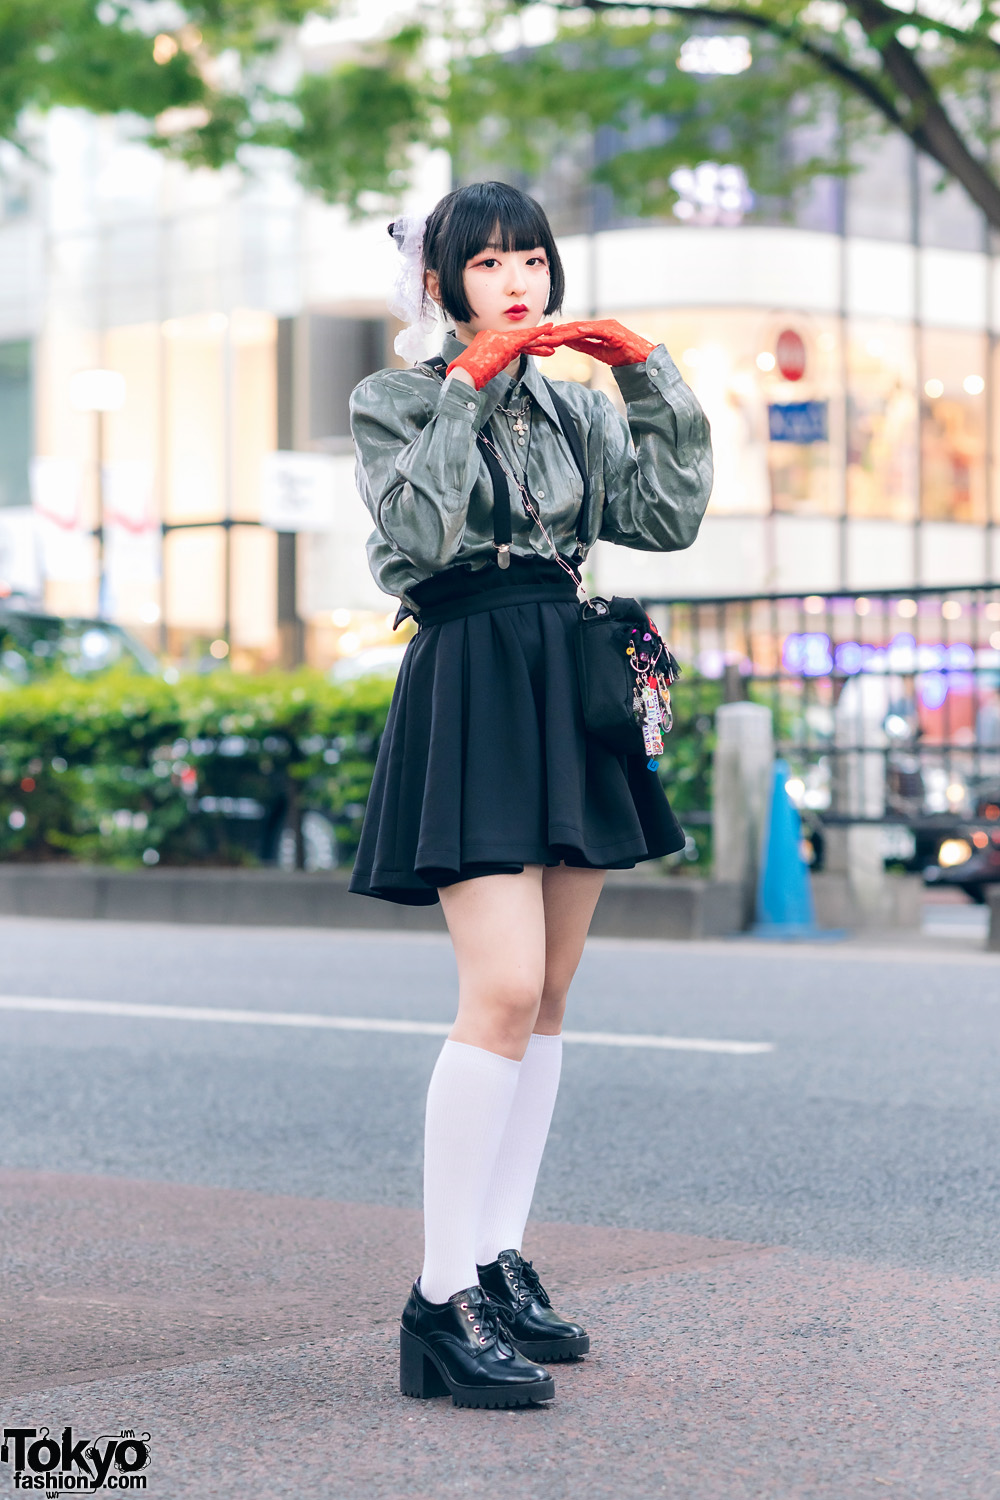 Harajuku Girl w/ Odango Hair, Metallic Shirt, Suspender Skirt, Milk Bag, Lace Gloves & Zara Pointy Boots